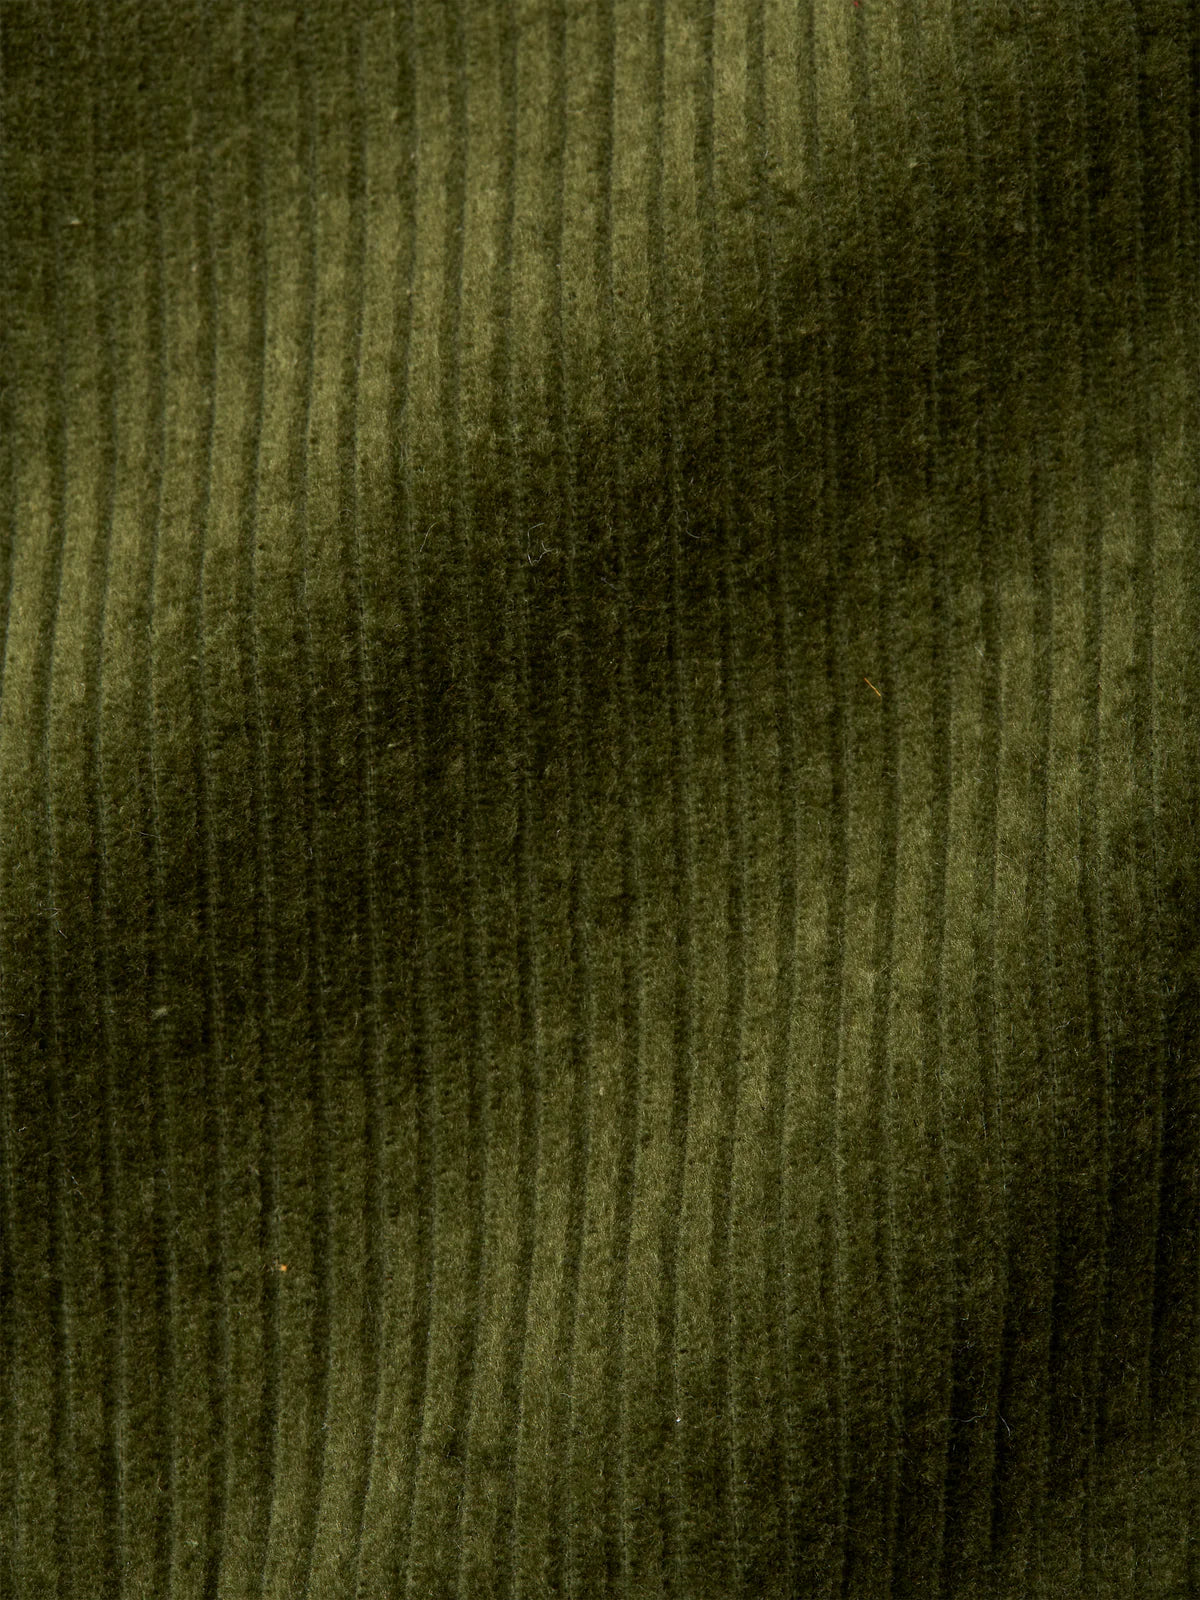 Treviscoe Shirt Hudson Cord Green